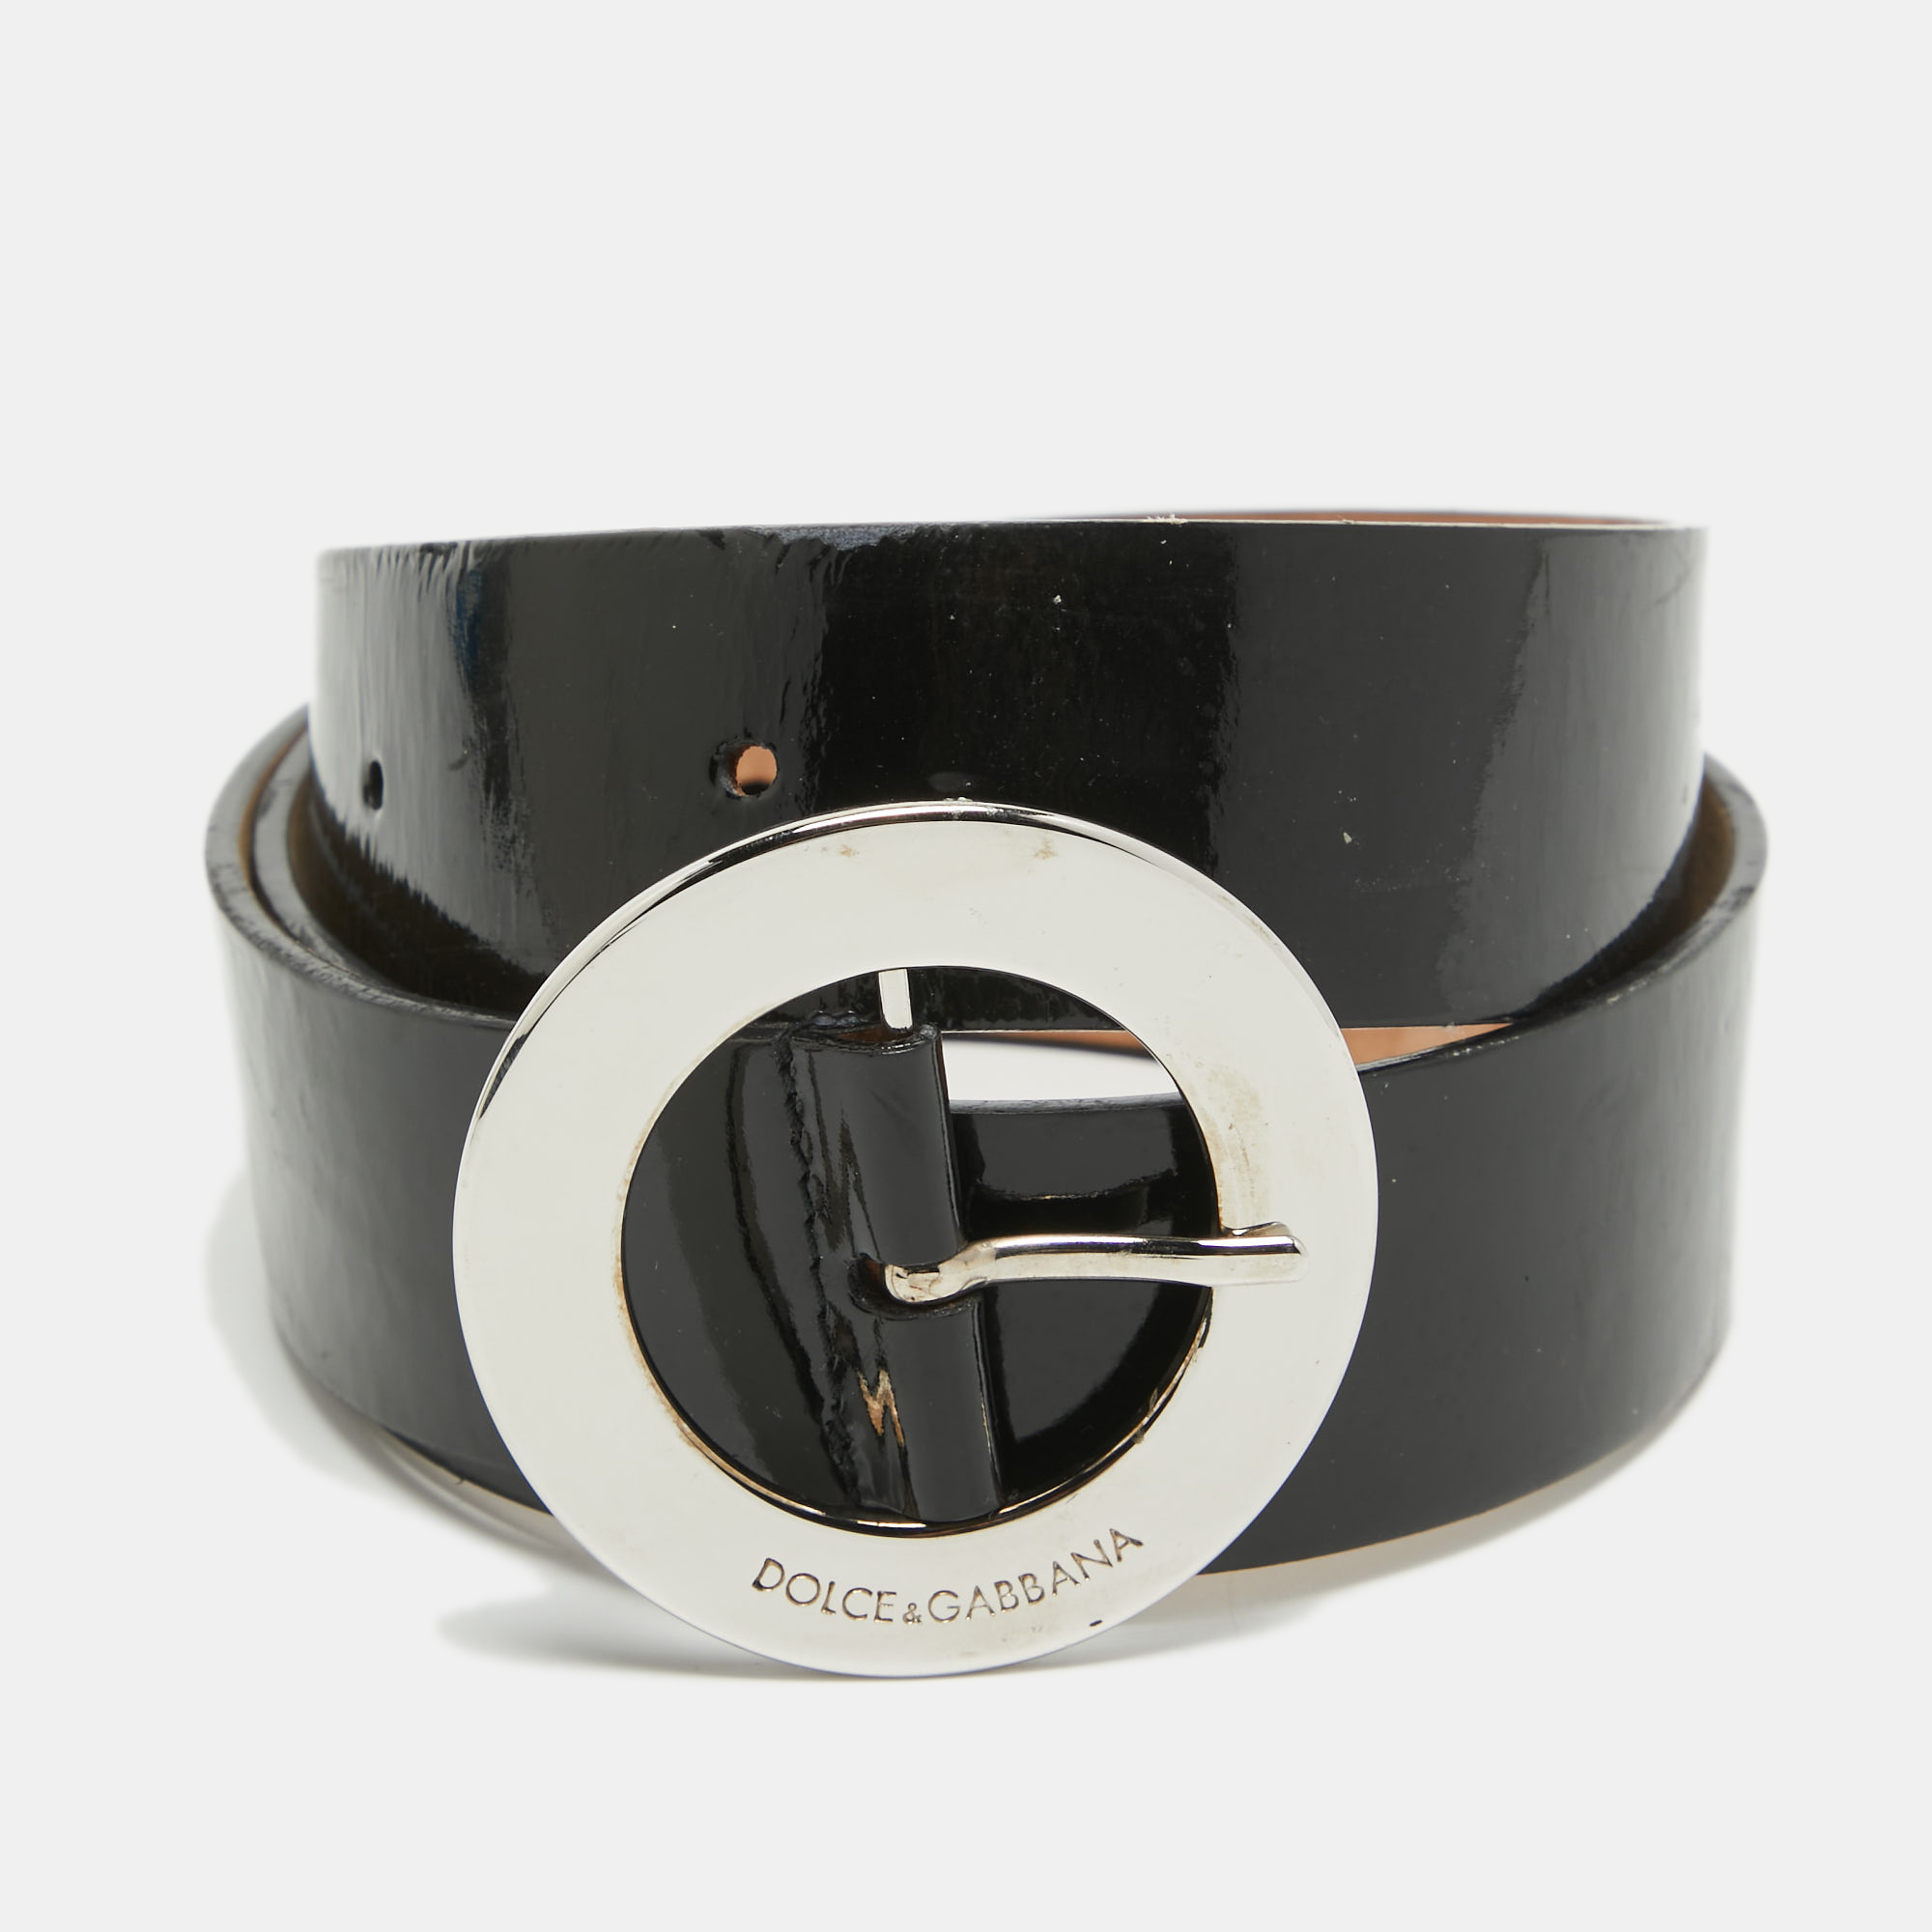 Dolce & gabbana black patent leather buckle belt 95 cm